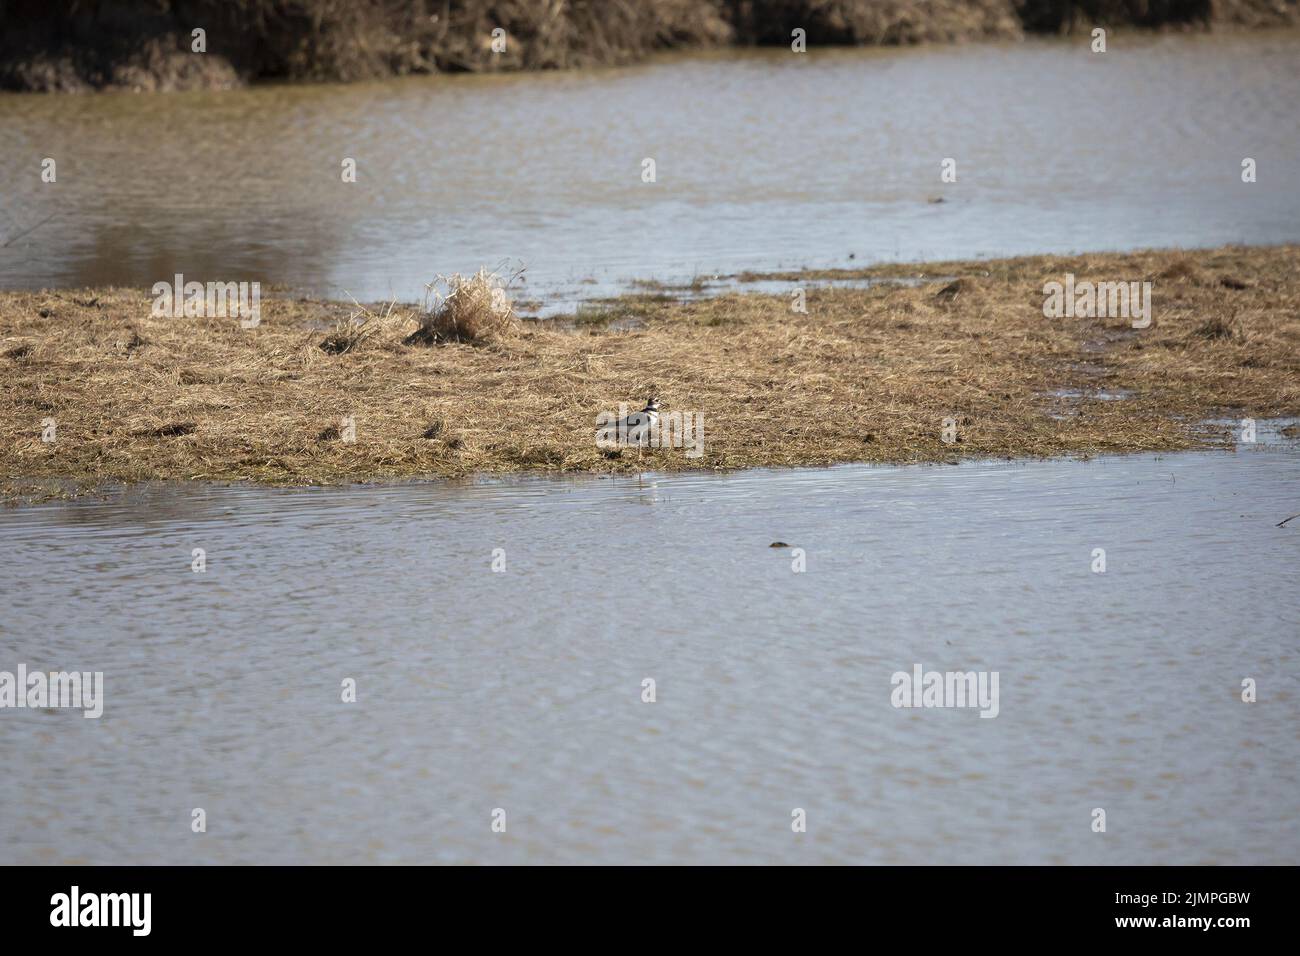 Killdeer (Charadrius vociferus) on a marshy strip of land in water Stock Photo